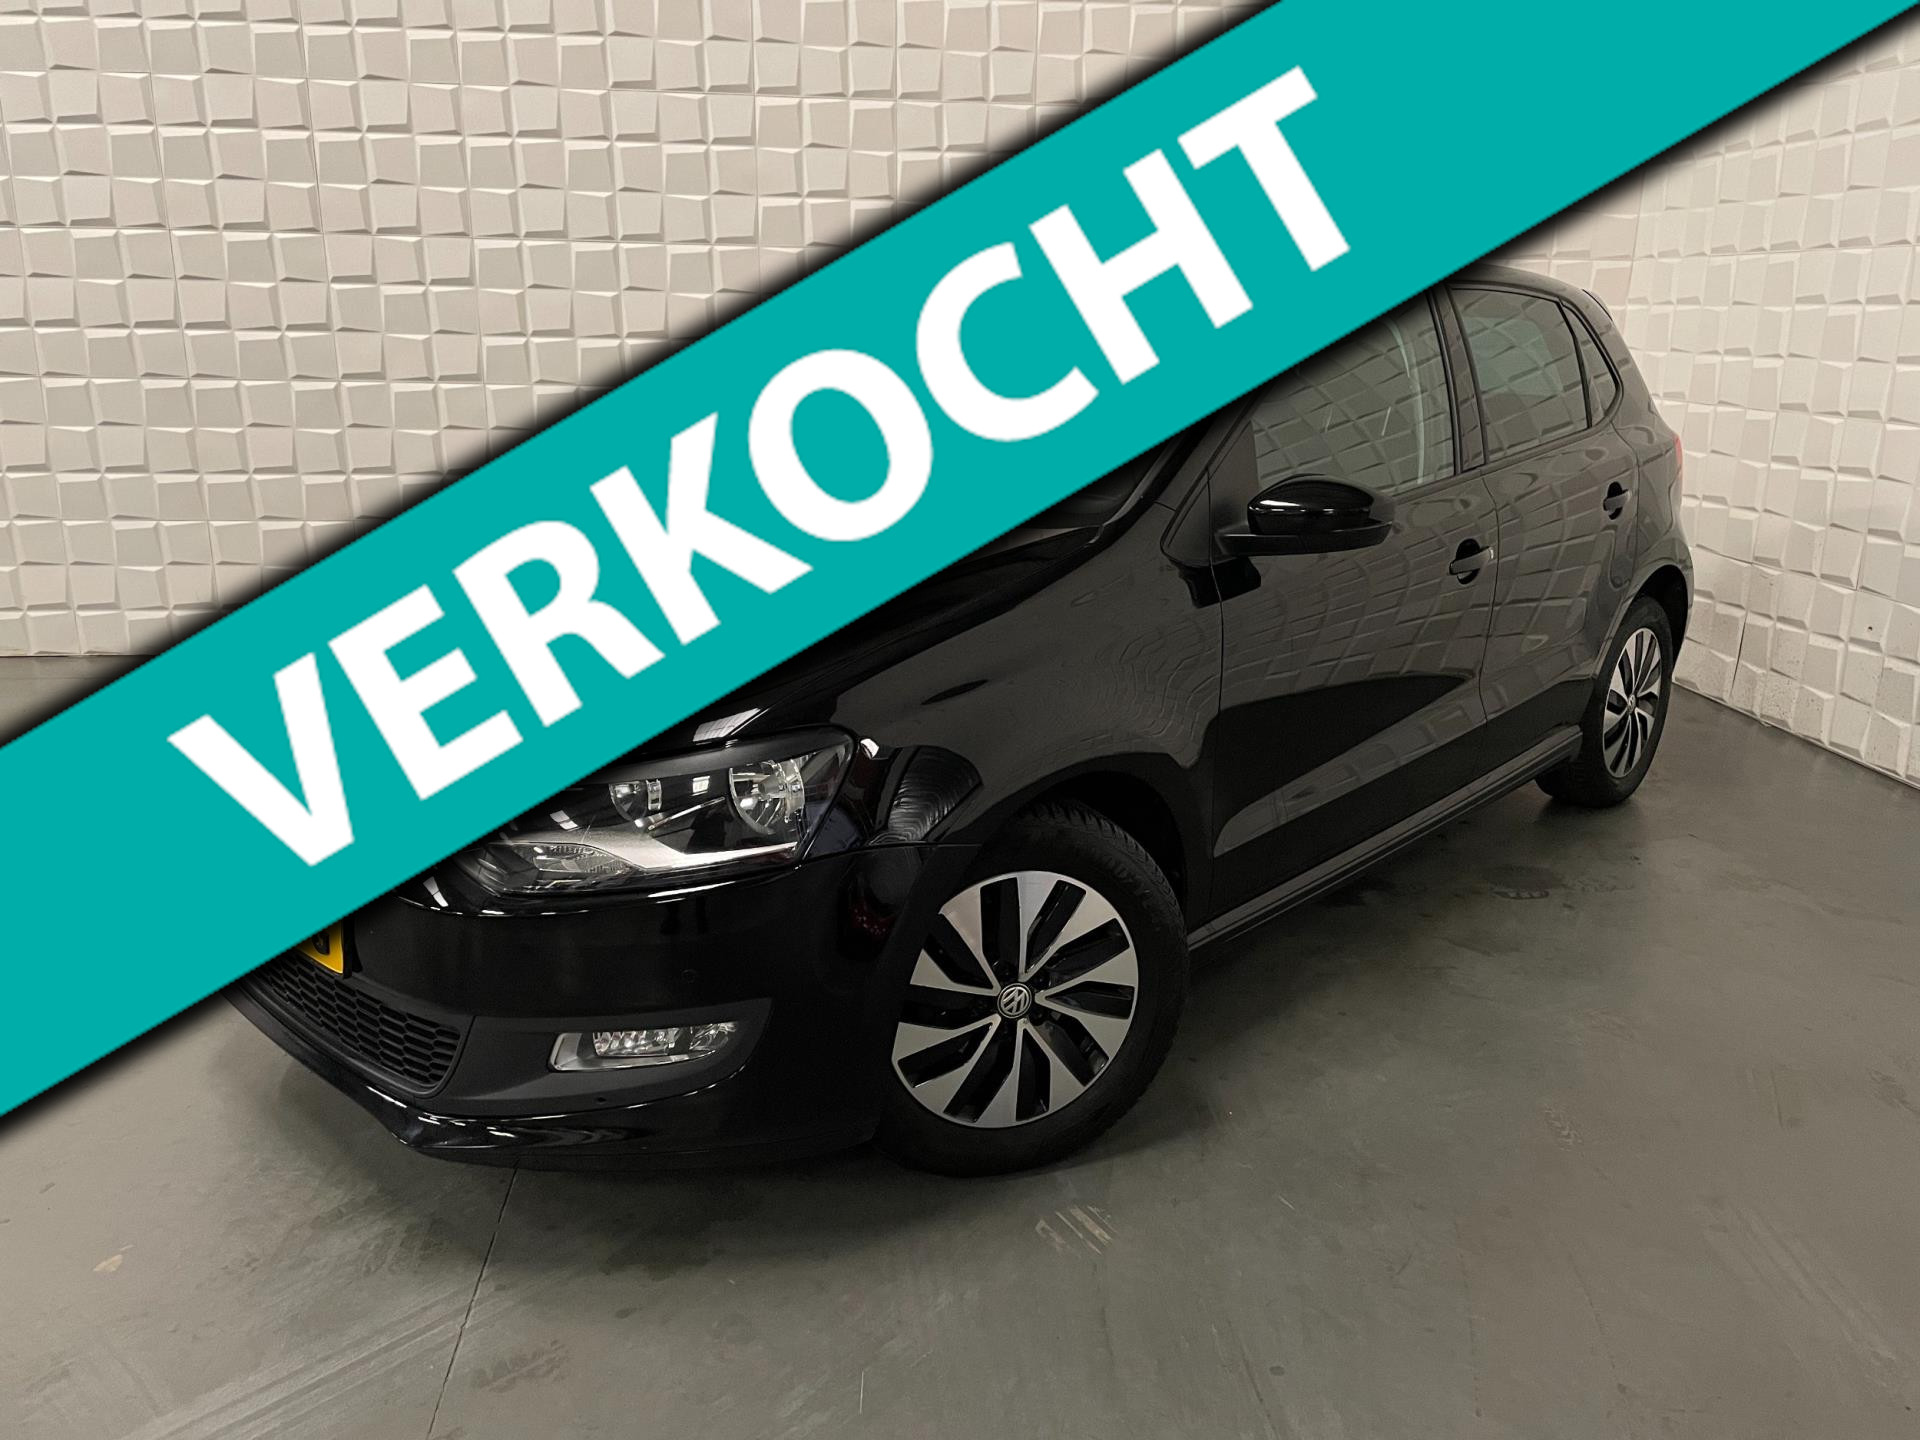 Volkswagen-Polo-fairautolease.nl